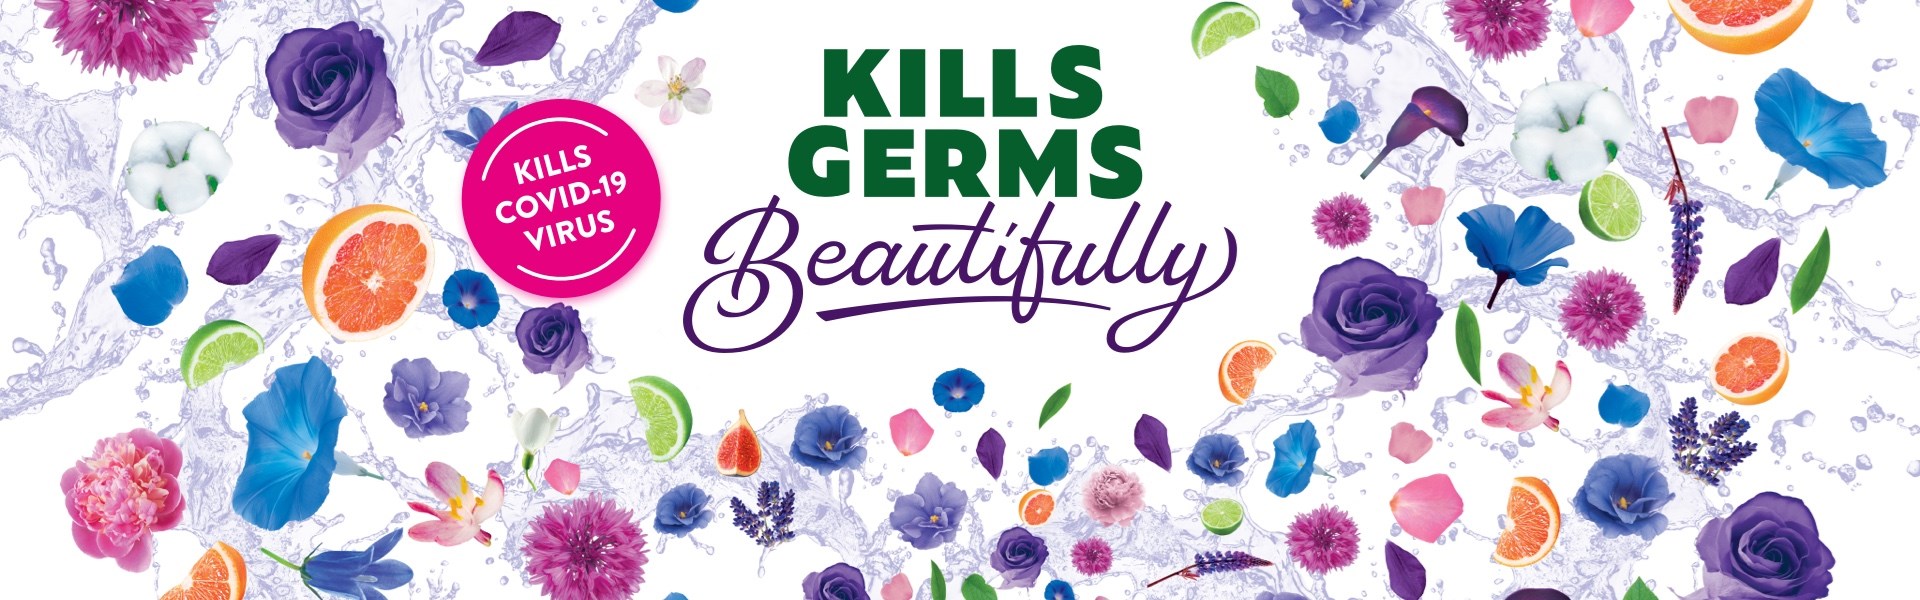 Killing Germs Beautifully since 1922 banner desktop